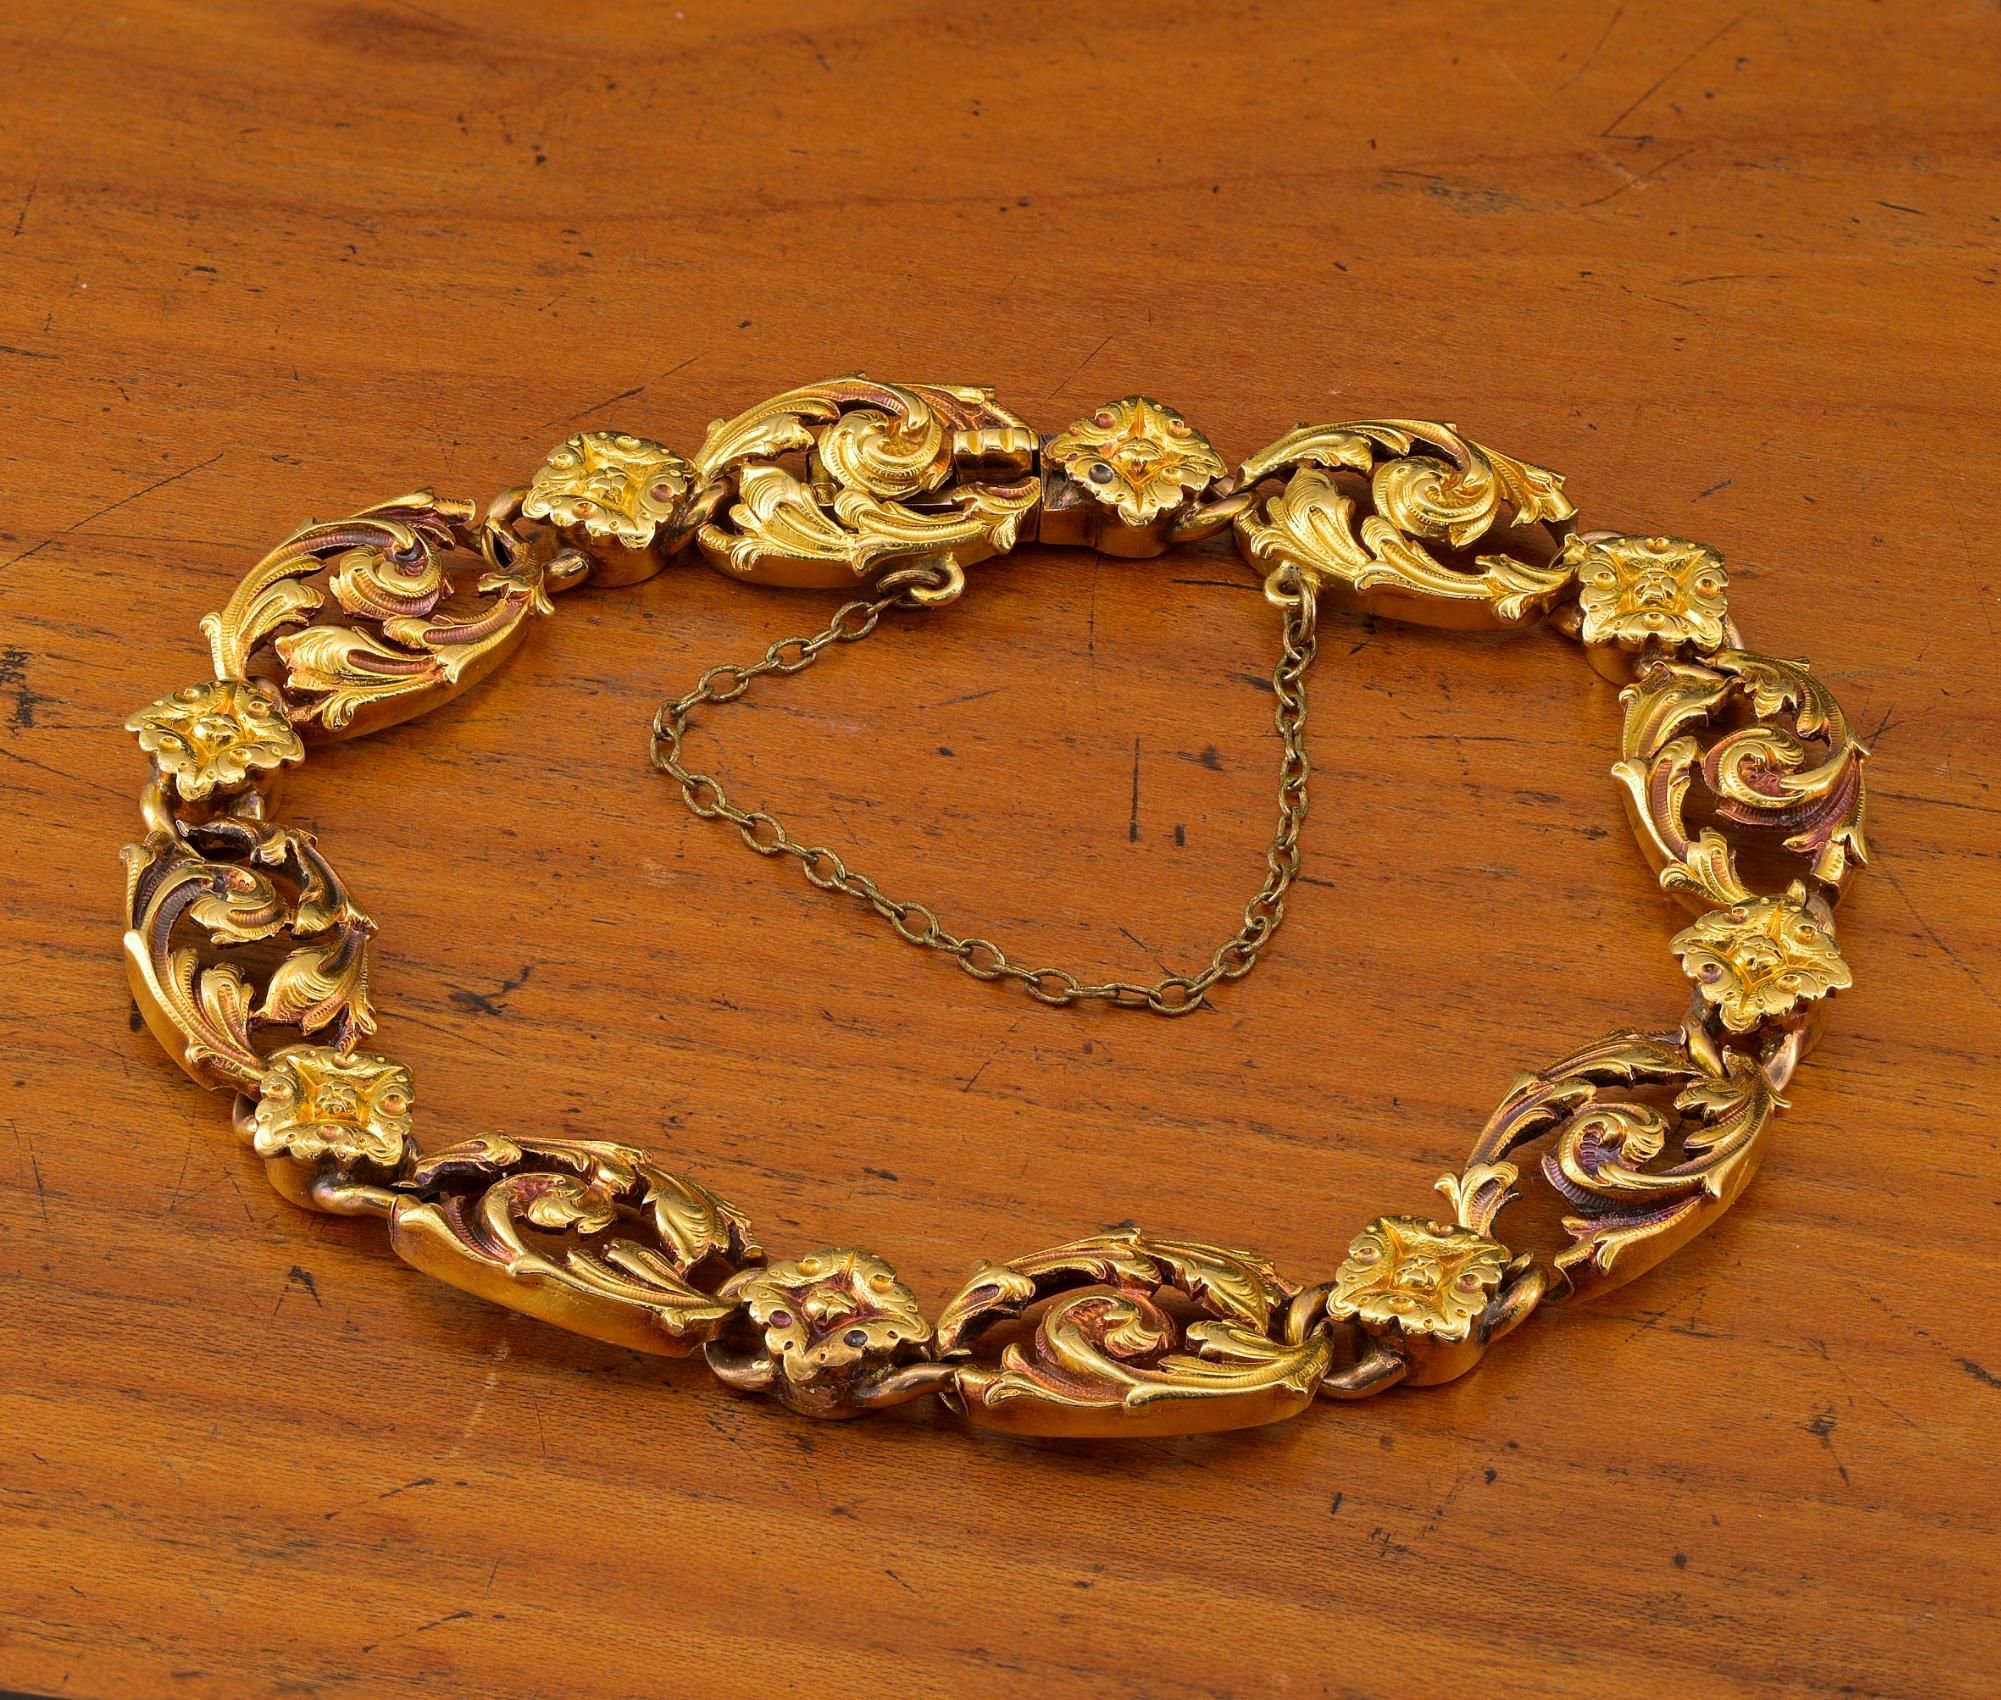 Prächtiges Jugendstil-Armband aus massivem 18-karätigem Gold, 1895 ca.
Französische Punzierungen
Jugendstilschmuck (